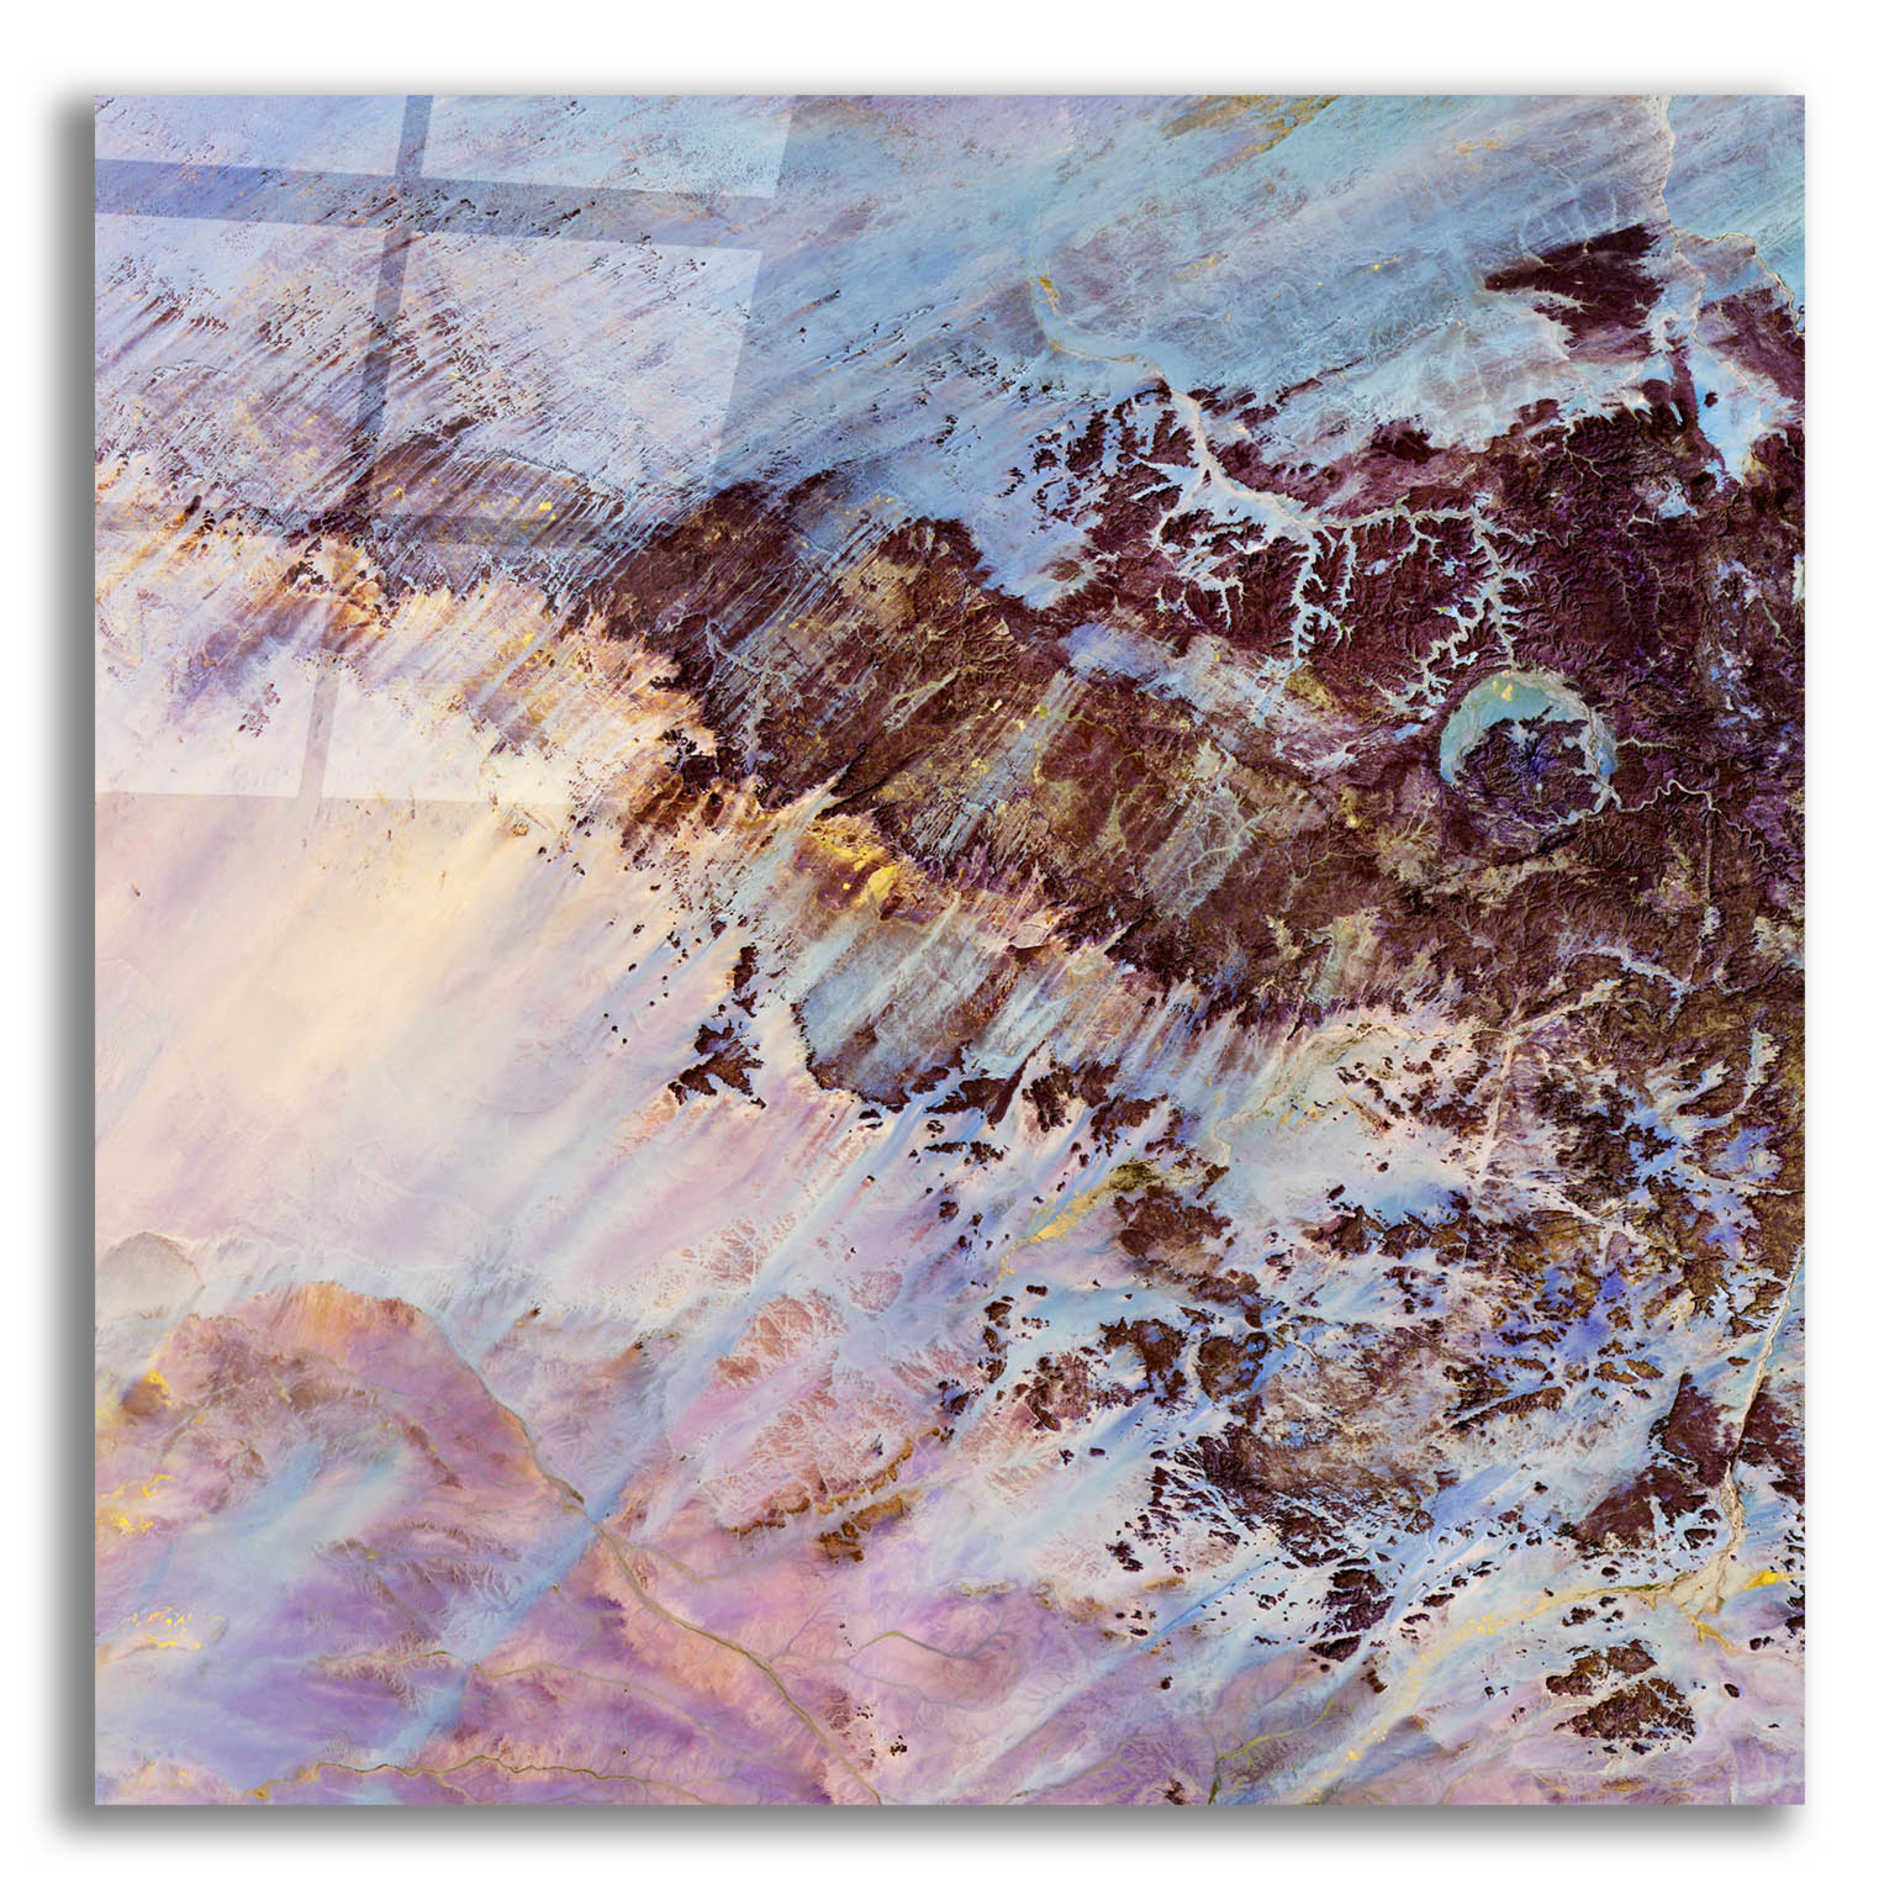 Epic Art 'Earth as Art: Storm Amid the Calm,' Acrylic Glass Wall Art,12x12x1.1x0,18x18x1.1x0,26x26x1.74x0,37x37x1.74x0